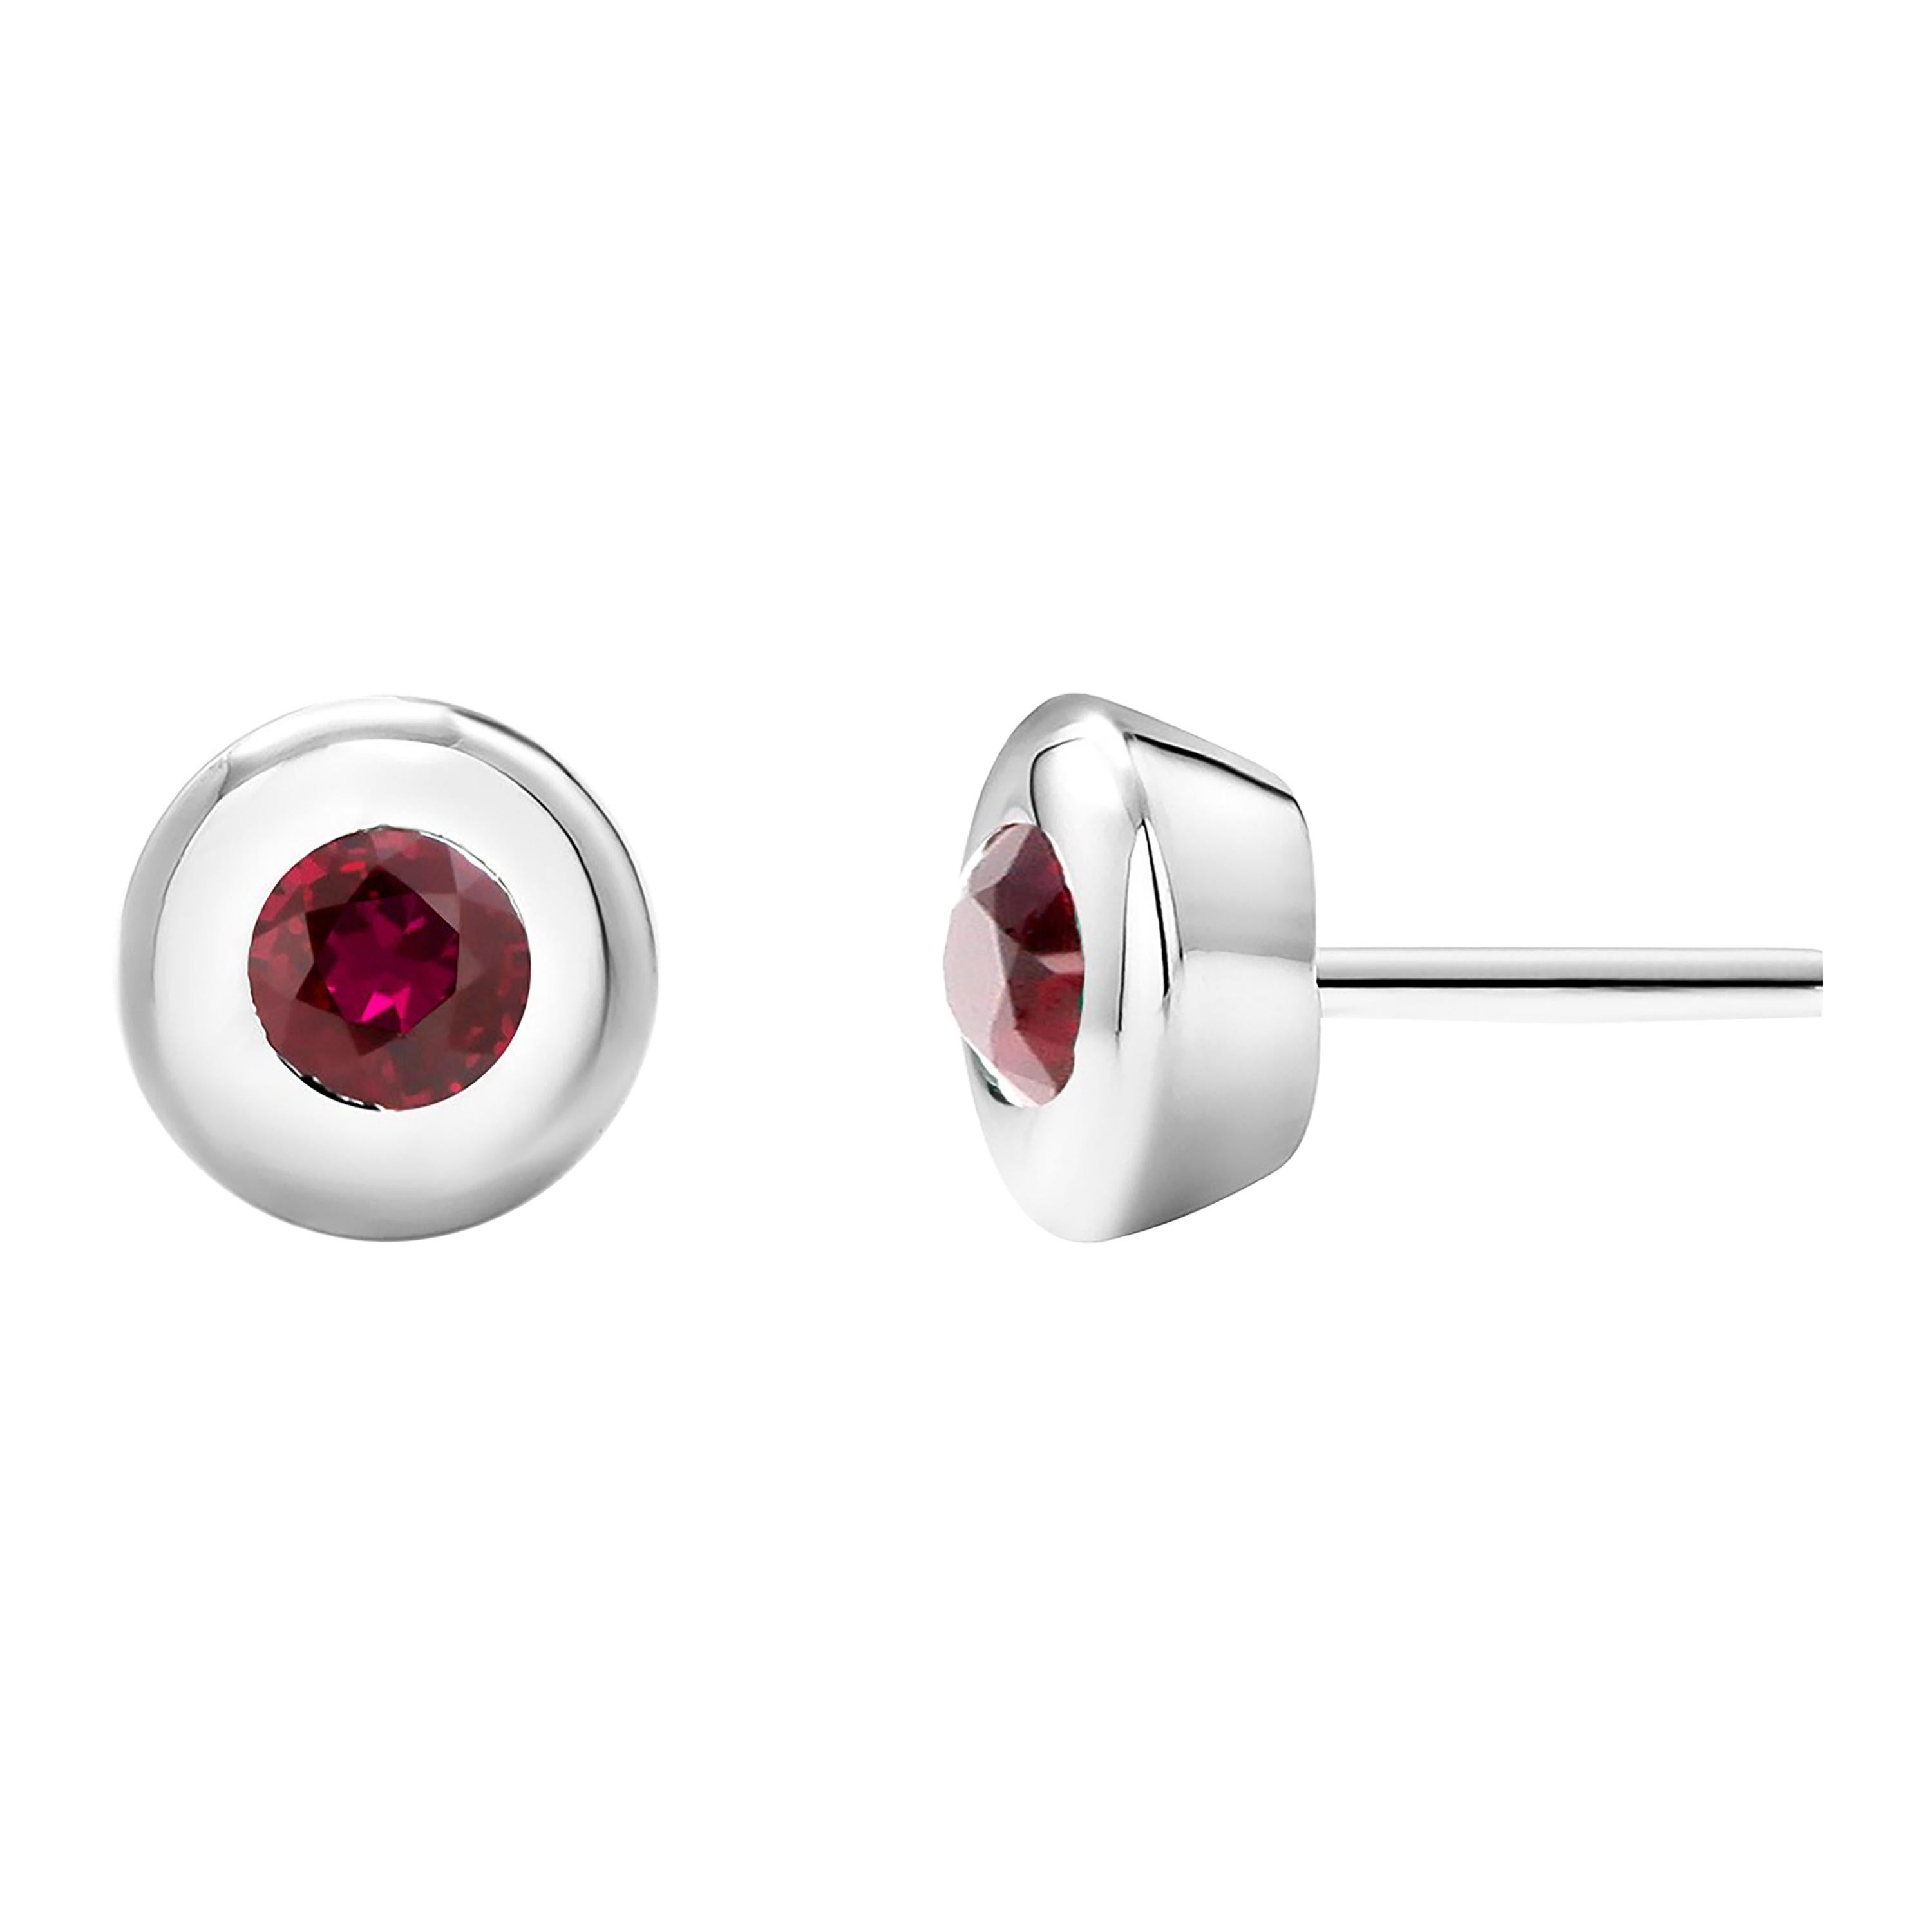 White Gold Bezel Set Ruby Stud Earrings Weighing 0.30 Carat